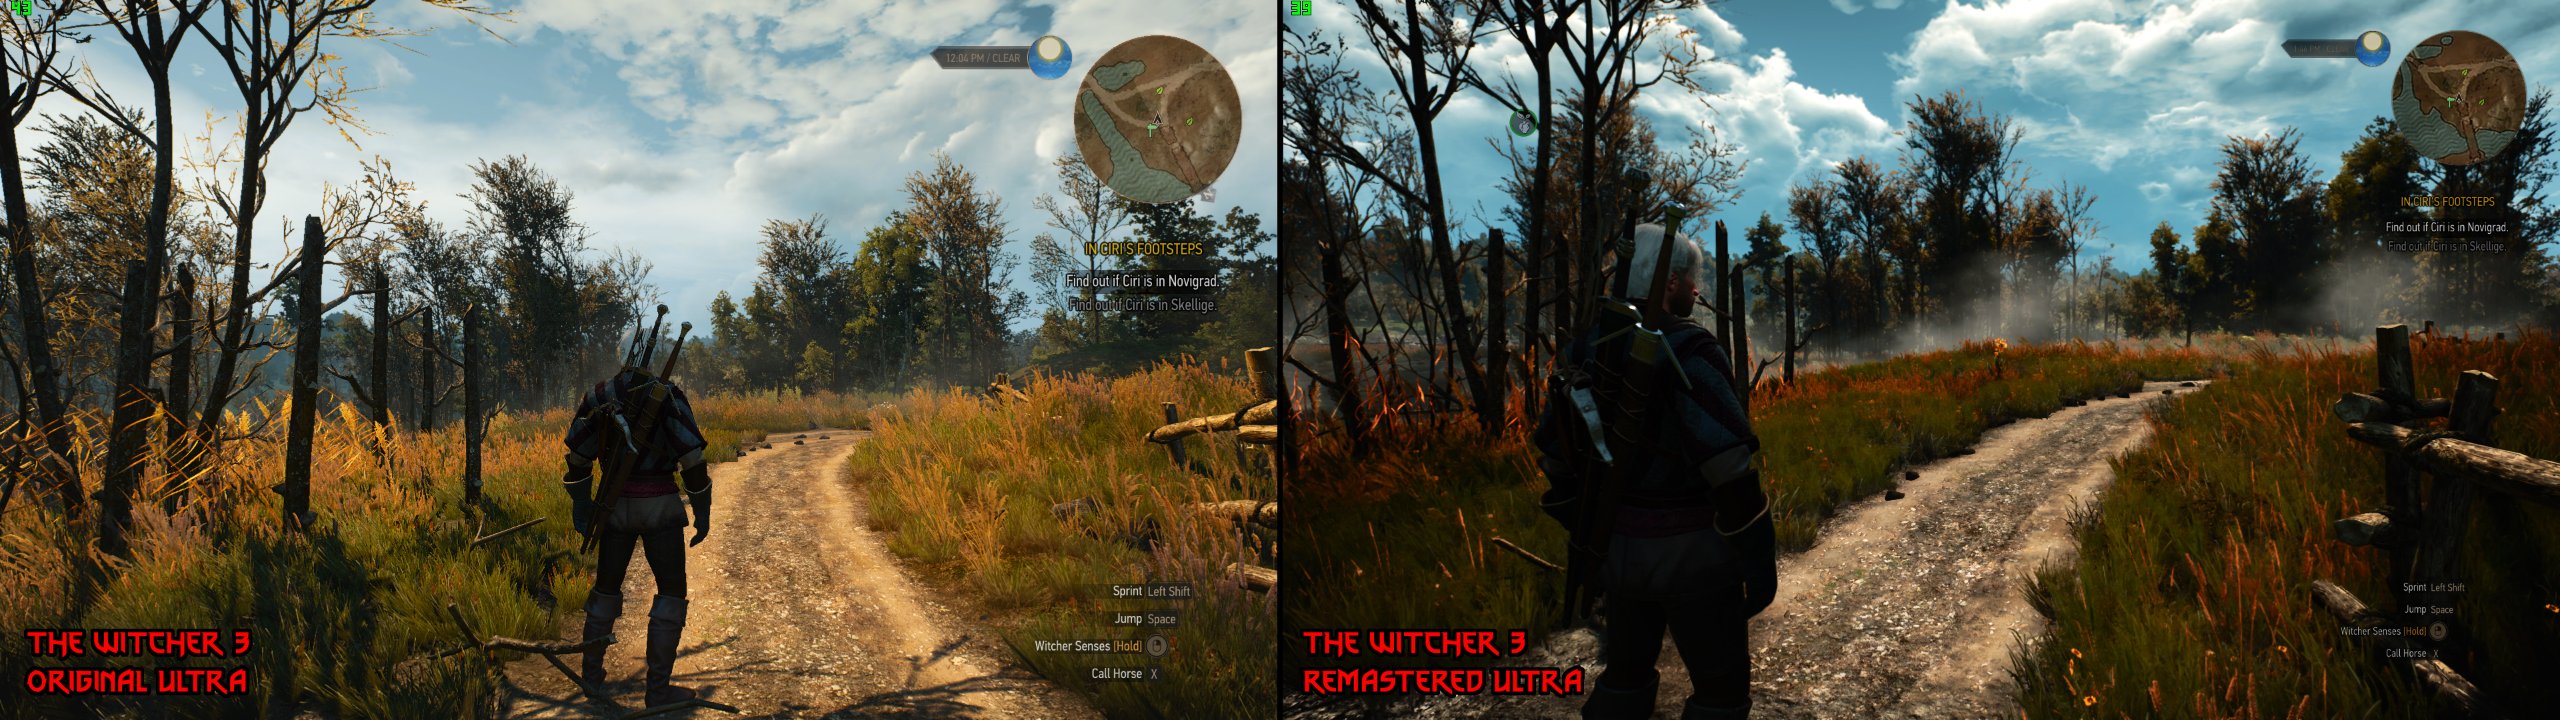 The Witcher 3 Original vs Remastered Comparison GTX 970 1080p Ultra